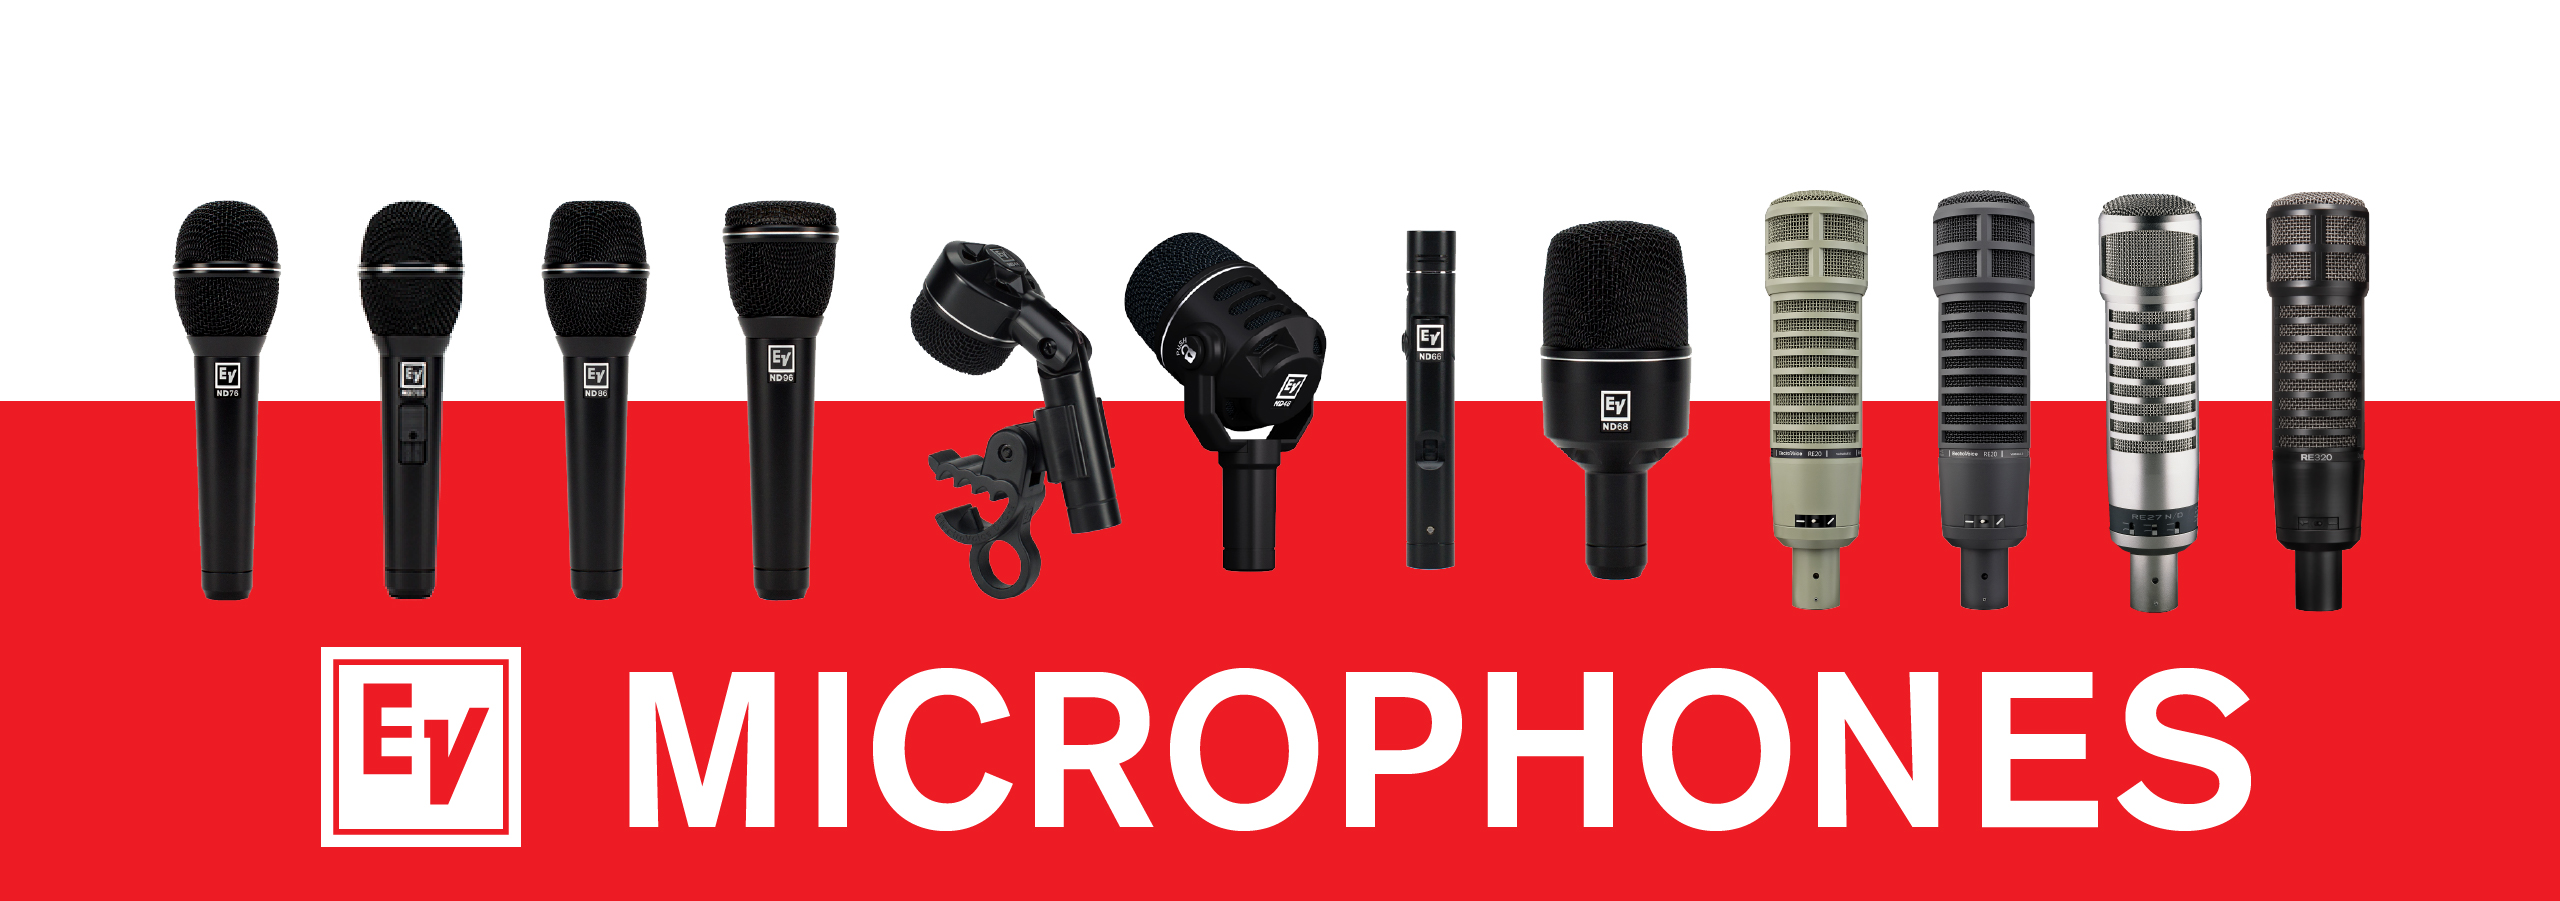 EV MICROPHONES by Electro-Voice